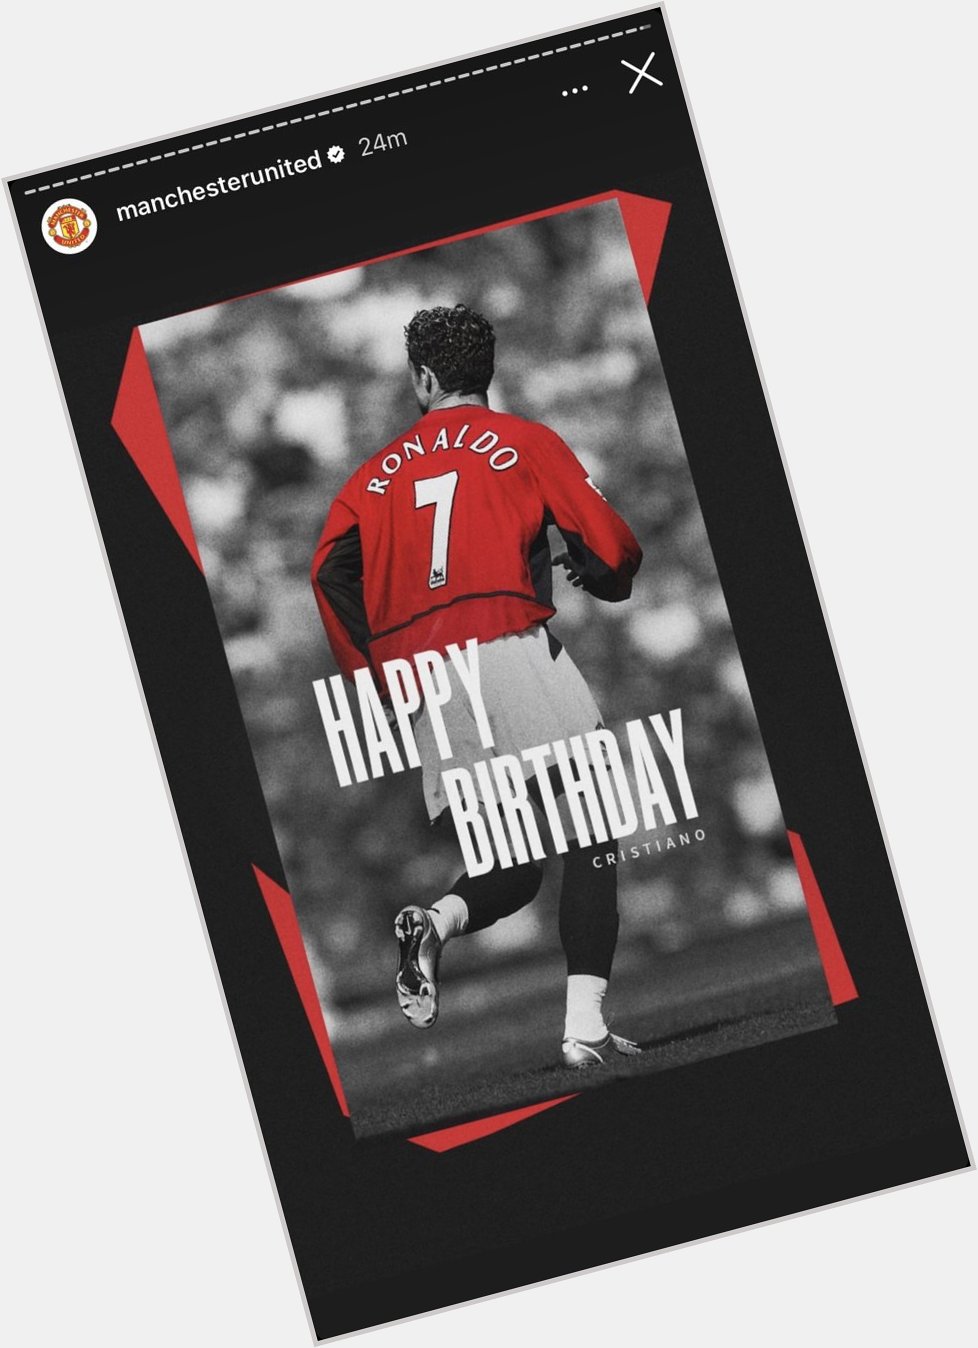 Manchester United wish Cristiano Ronaldo a Happy Birthday on Instagram.   